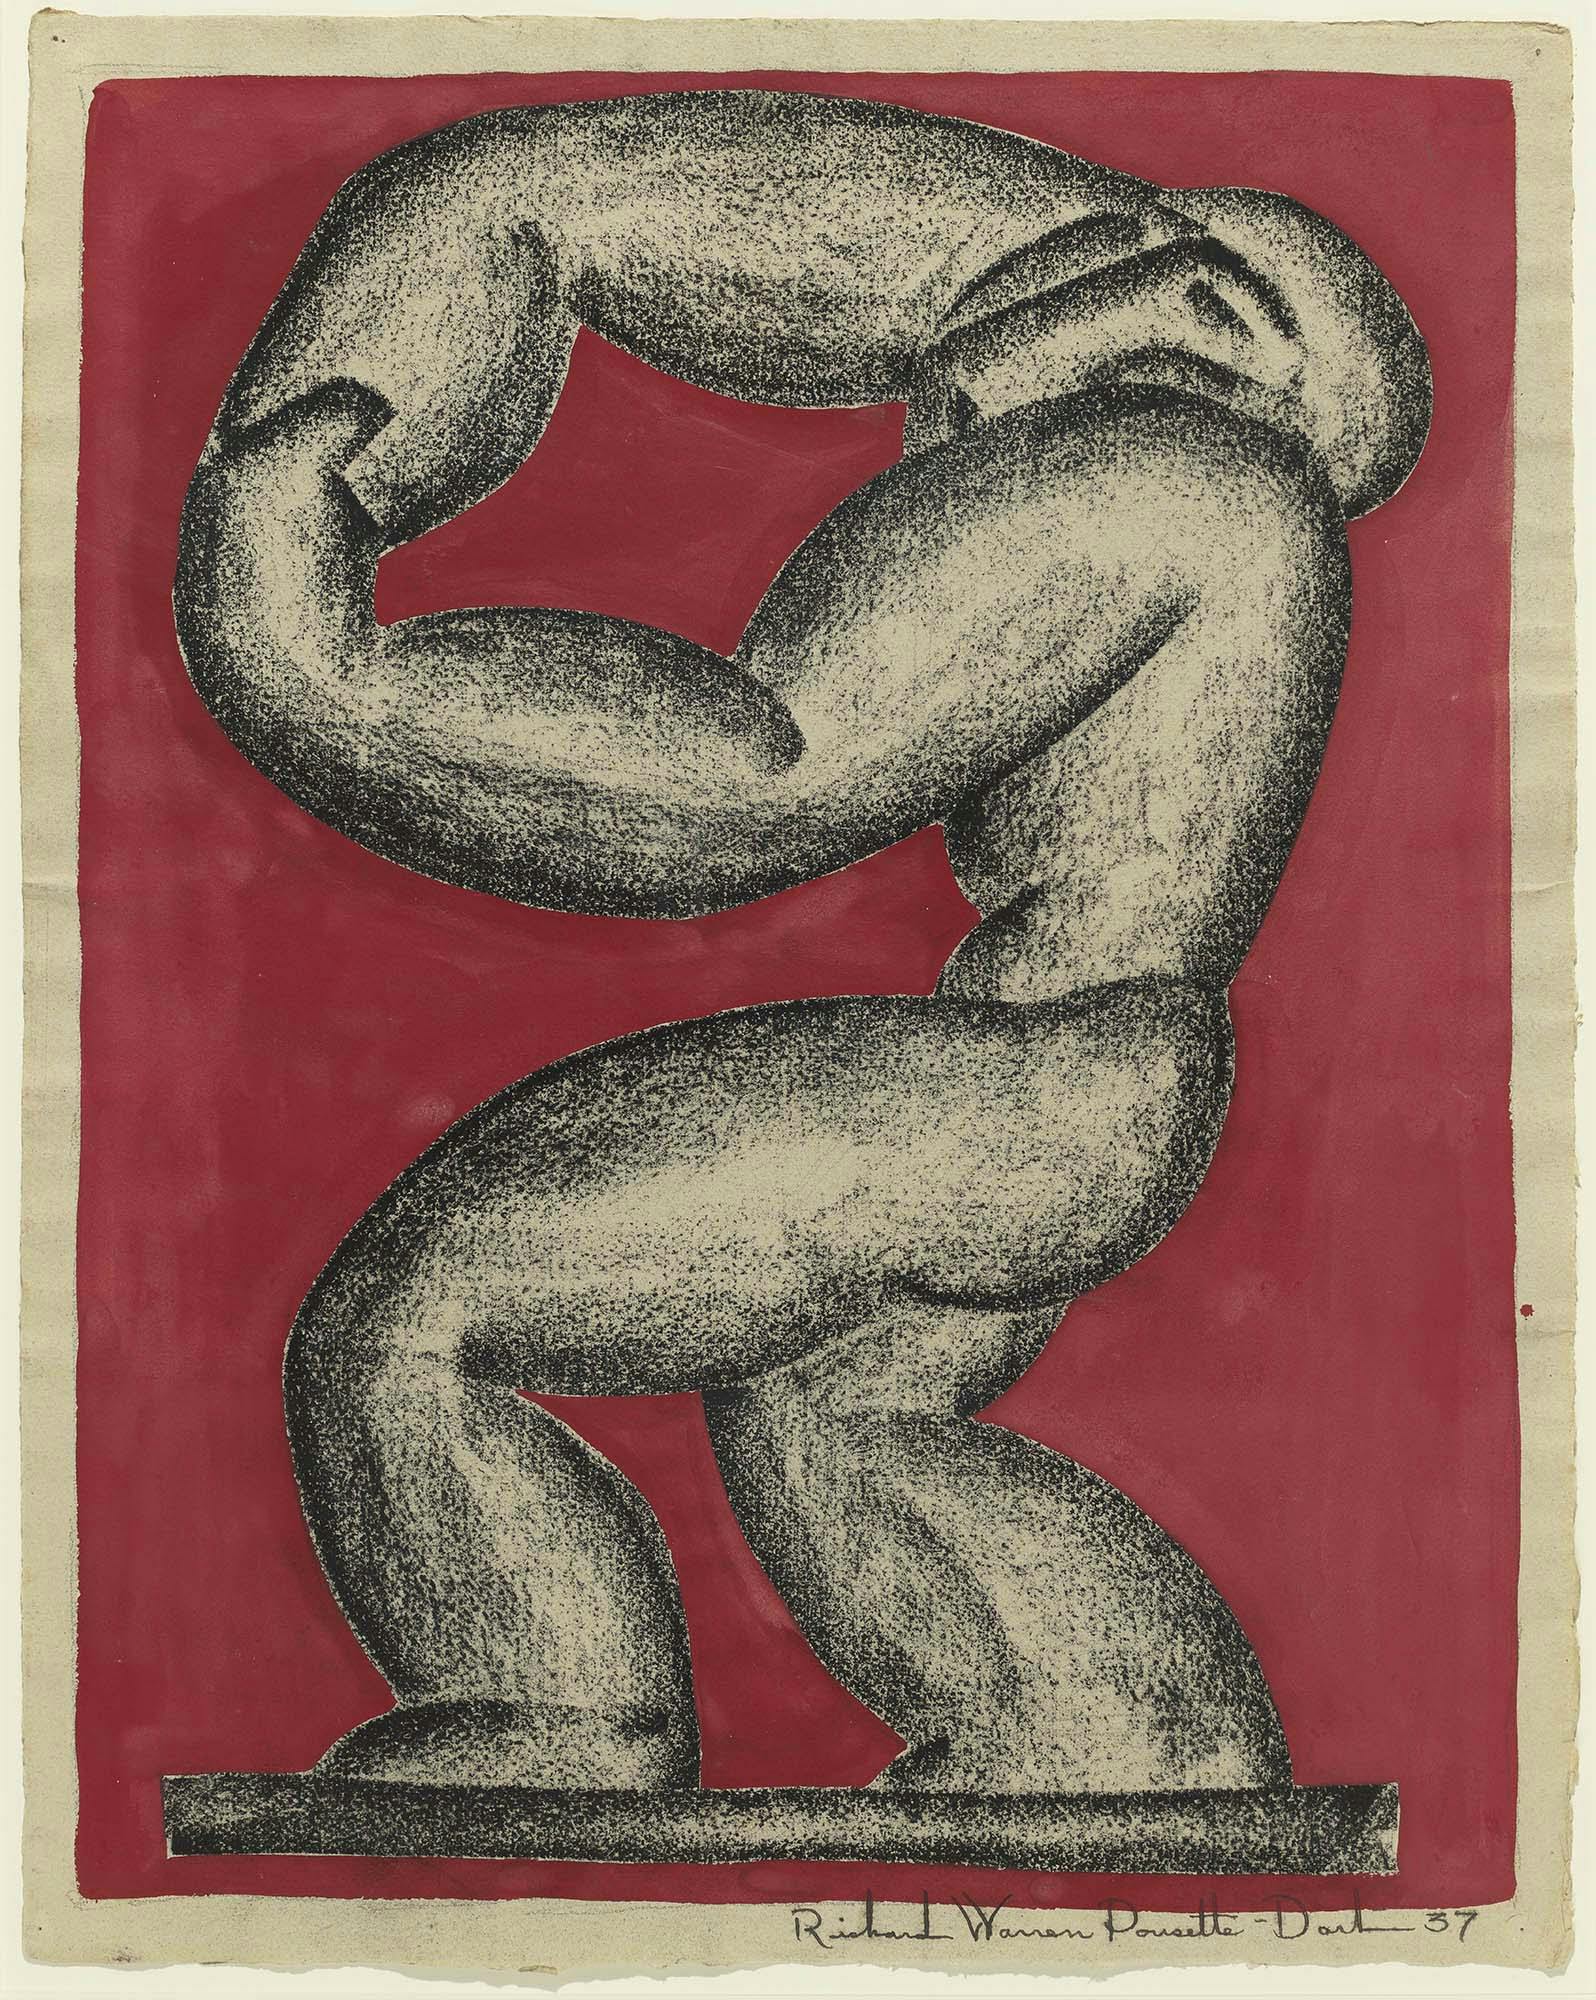 The Dance IV
1937
Conté and gouache on paper
22 3/4 x 18 in. (57.8 x 45.7 cm)
 – The Richard Pousette-Dart Foundation